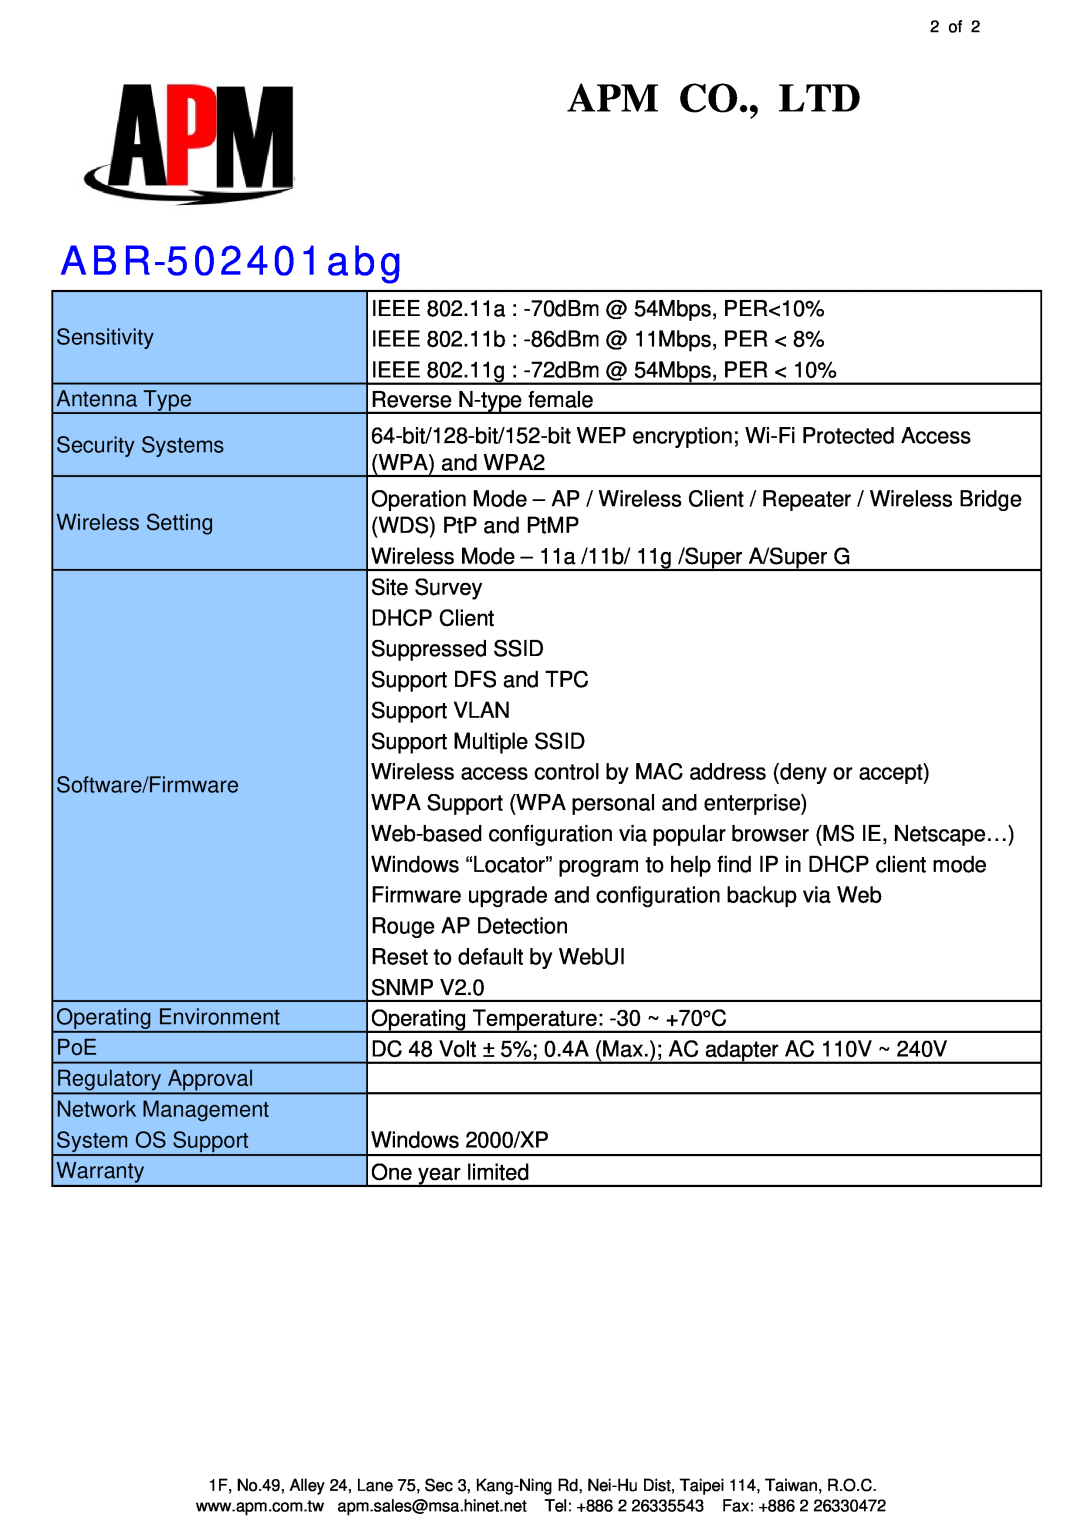 APM ABR-502401ABG manual ABR-502401abg, Sensitivity 